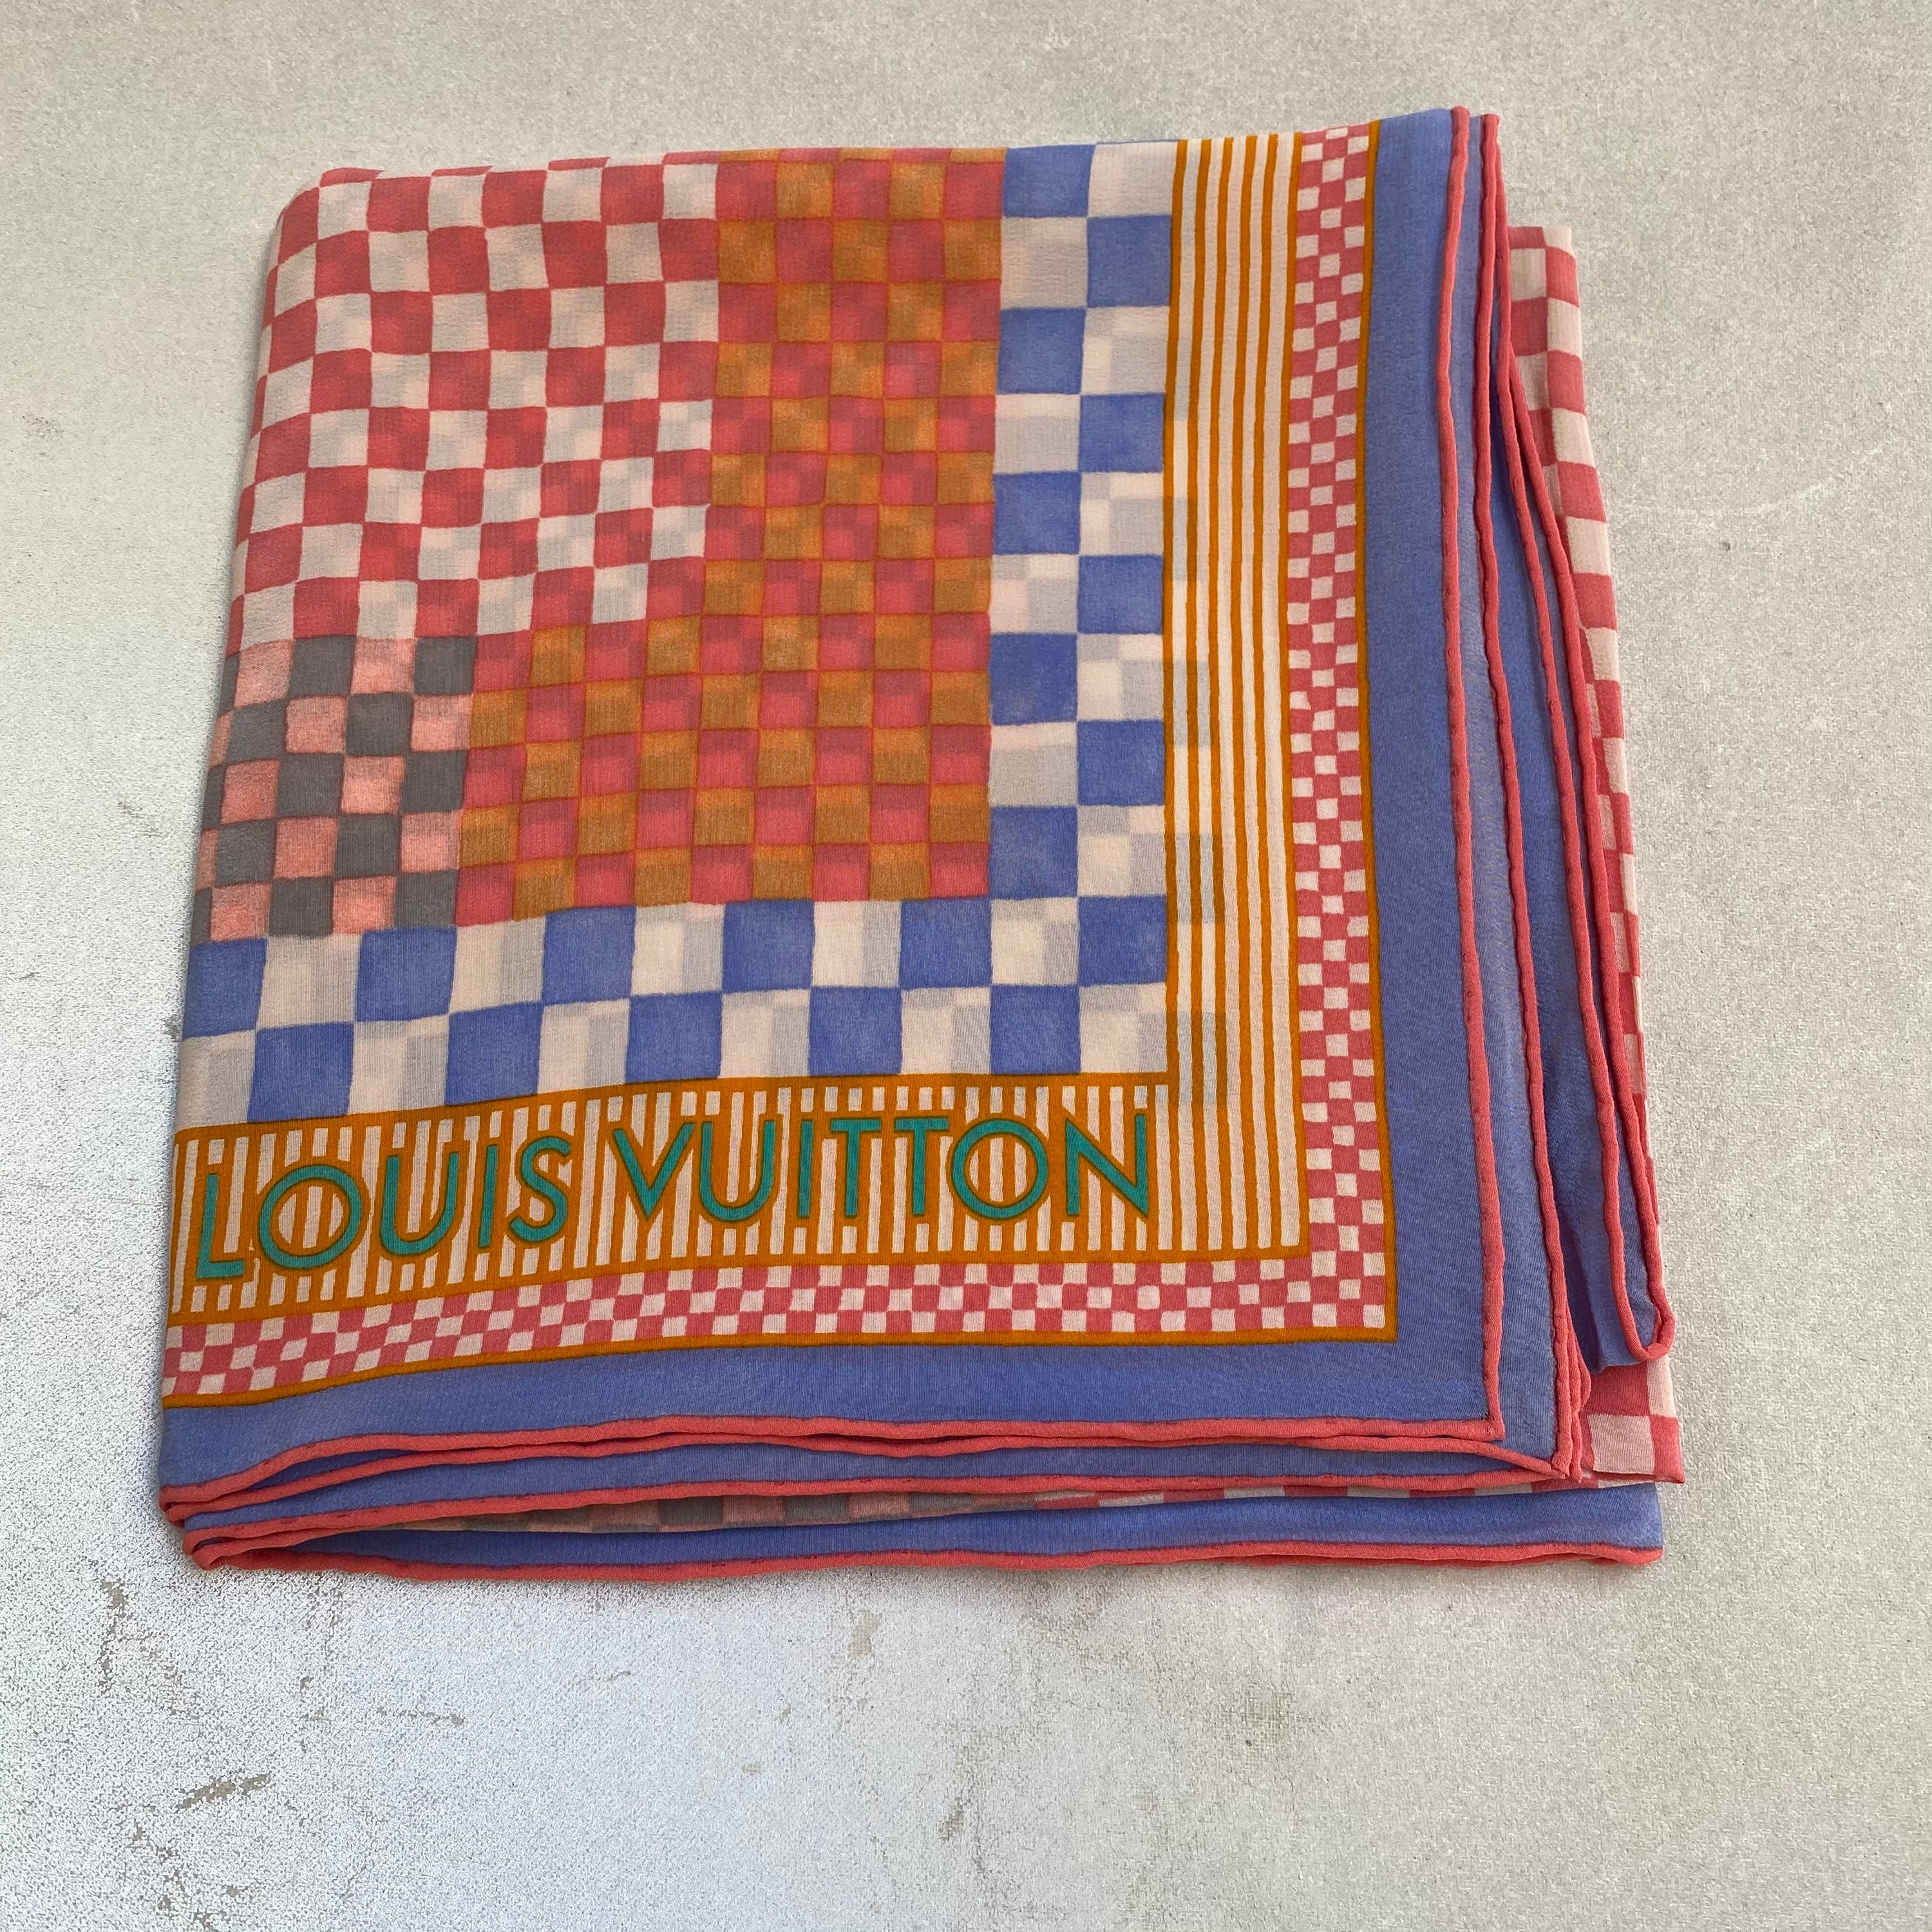 Vintage LOUIS VUITTON PARIS Sheer Silk Scarf / Made in Italy / 